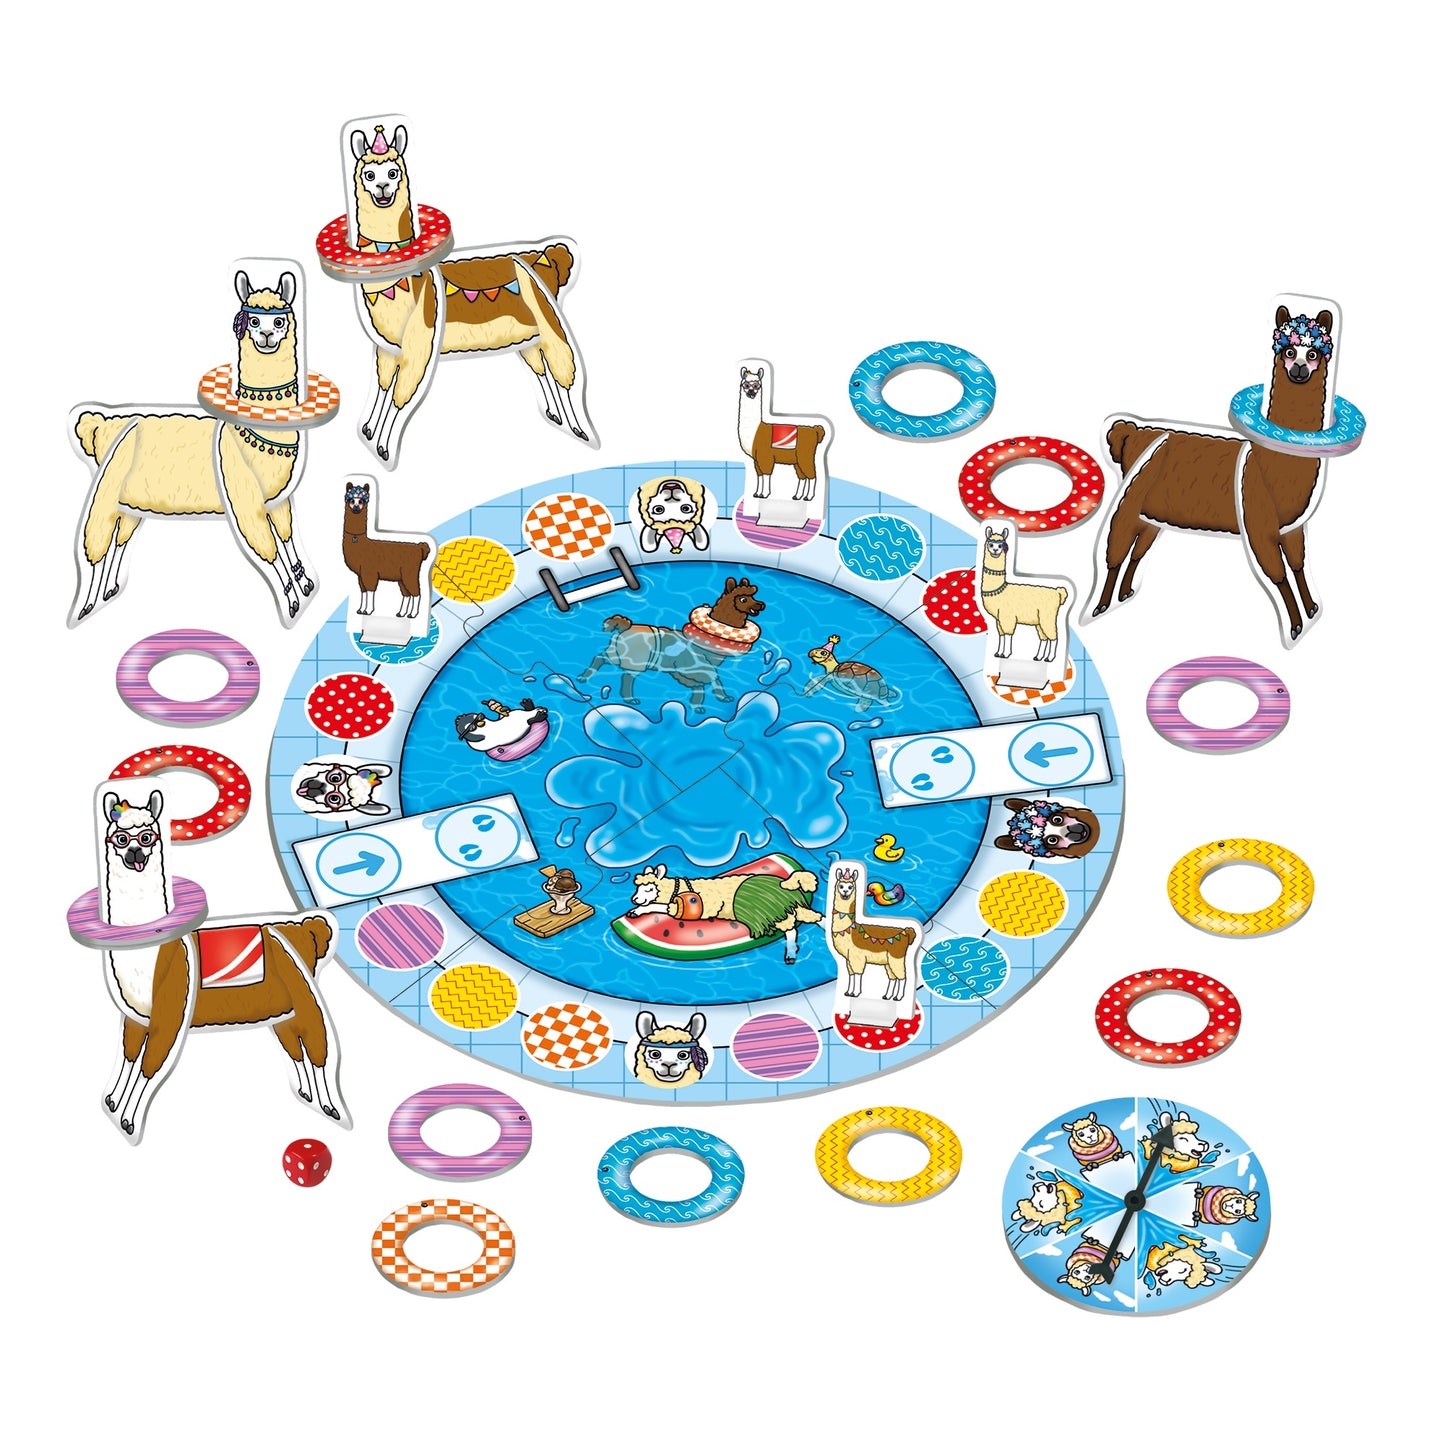 Orchard Toys Loopy Llamas Matching & Pegging Game 瘋狂大羊駝配對遊戲